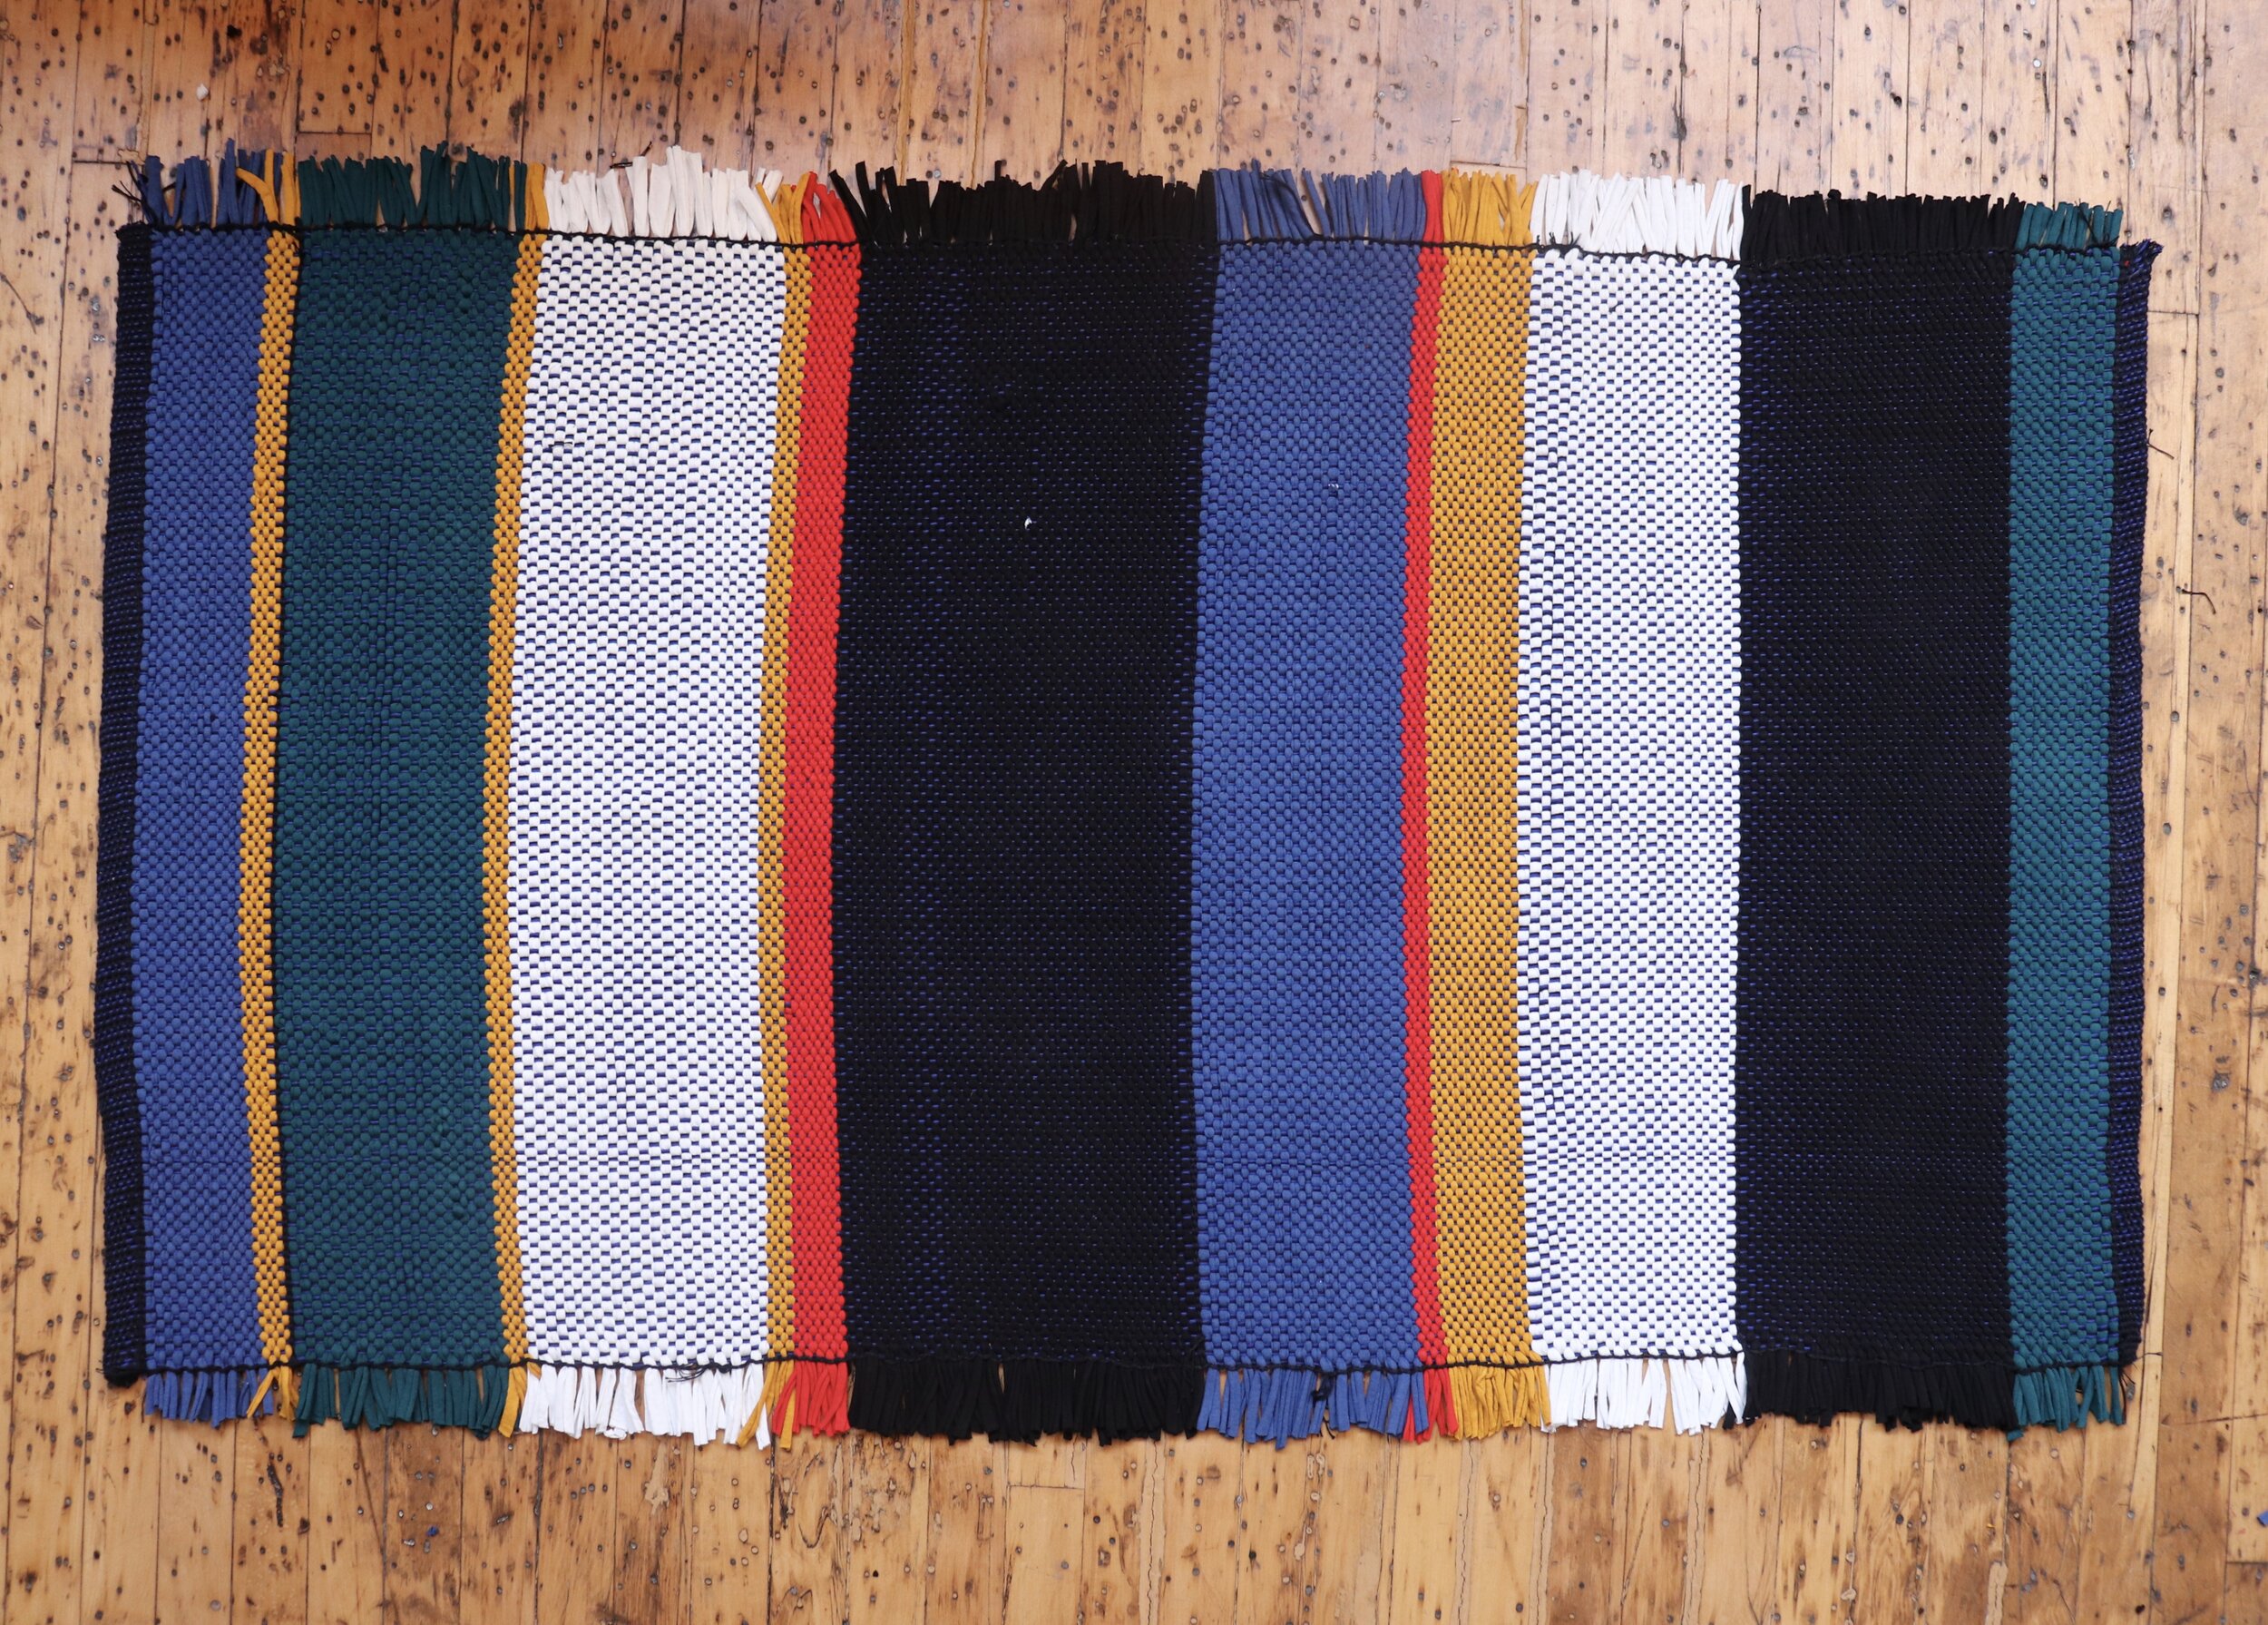 Knit t-shirt rag rug, 2020